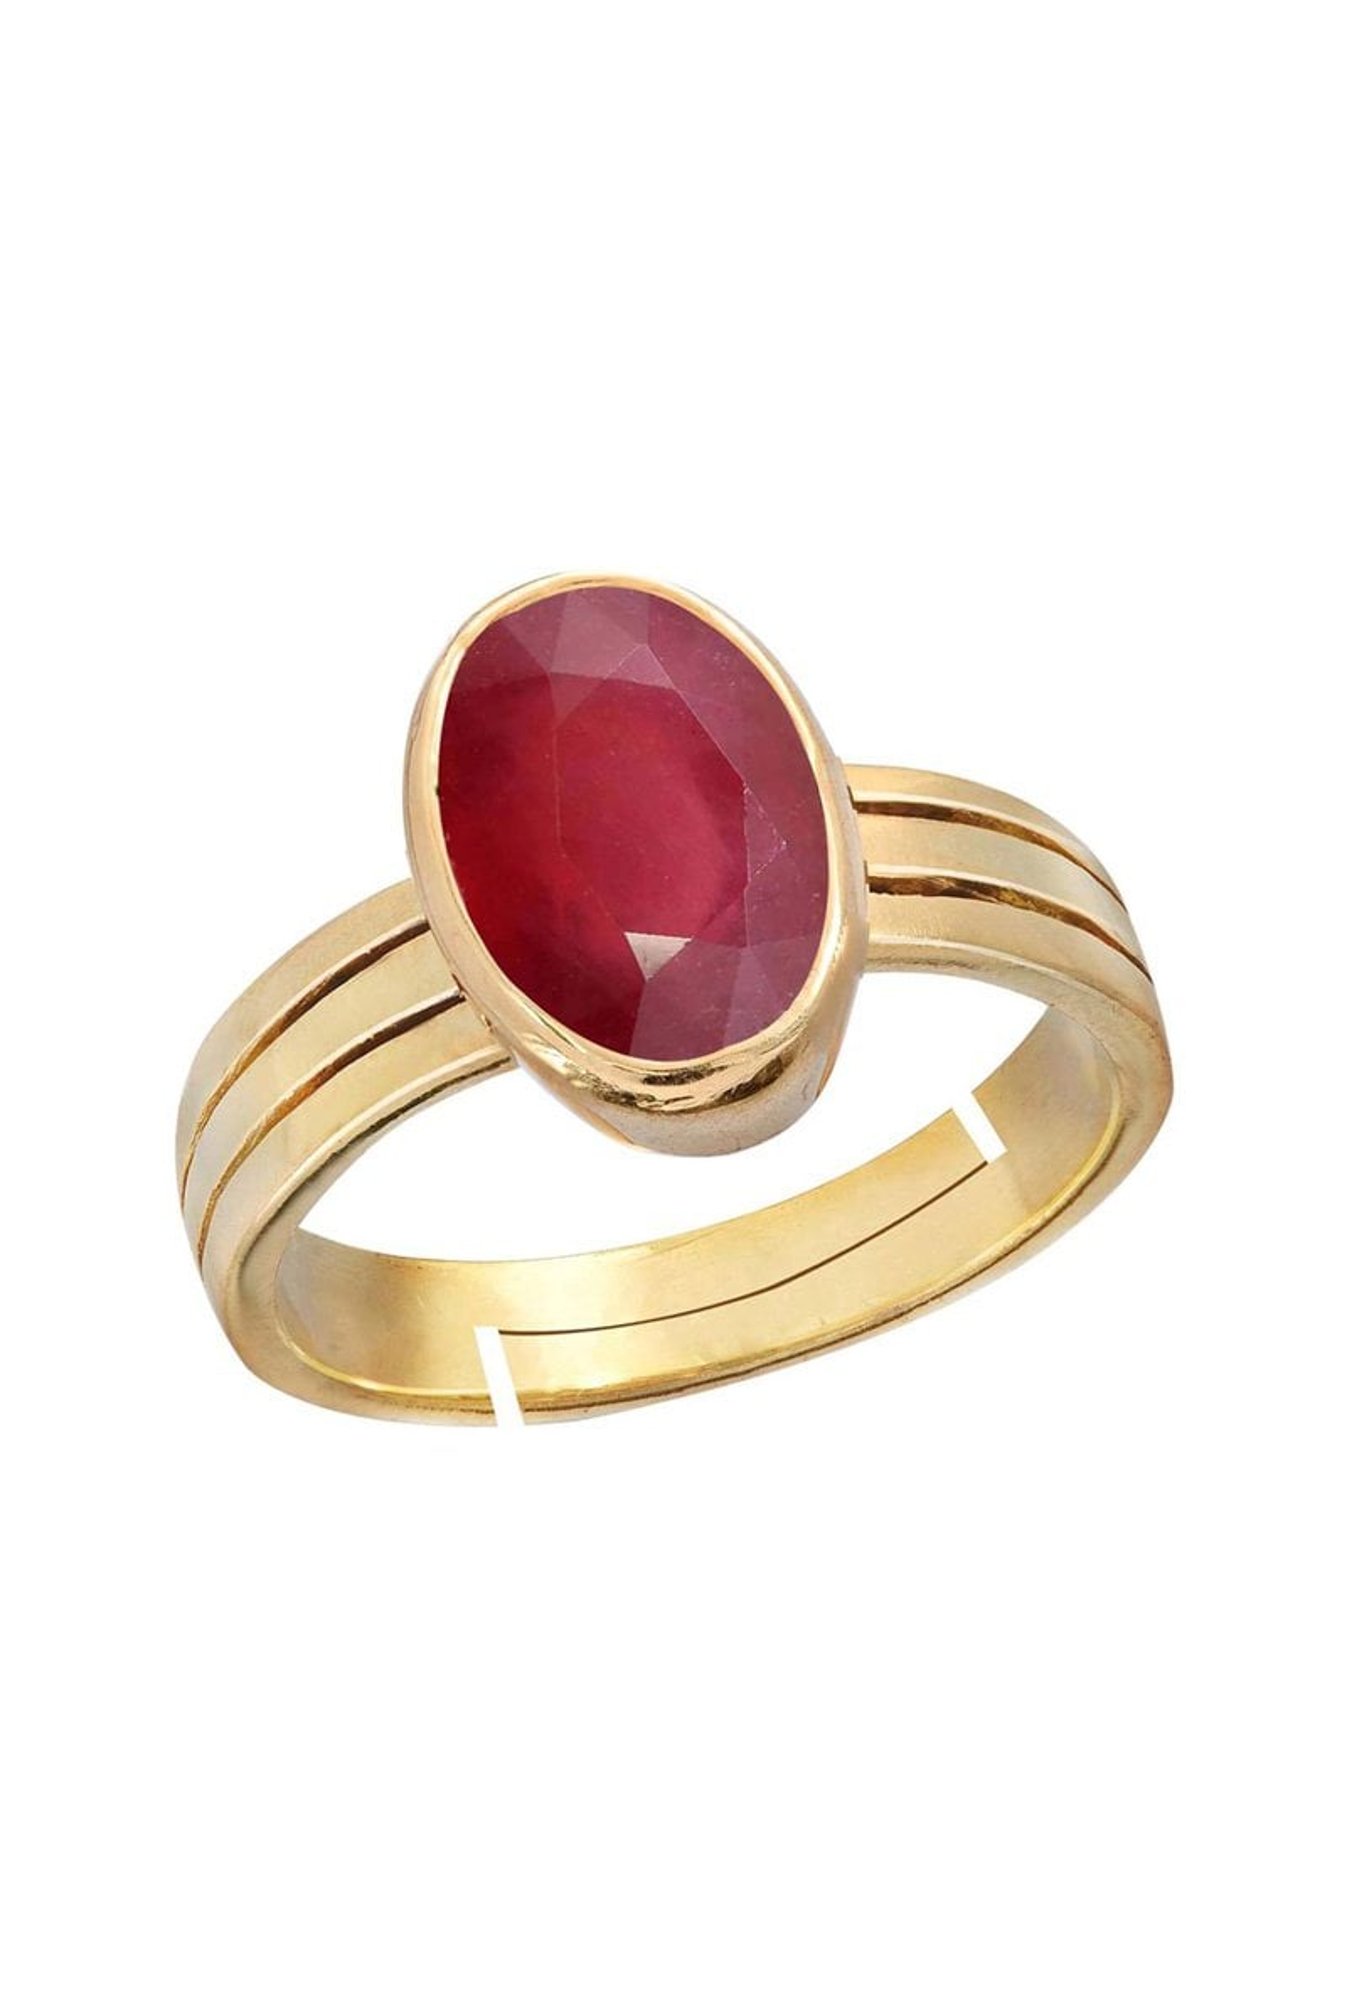 certified gemstones, ruby stone price, ruby ring designs, manikya stone  price, manik ratan, rashi ratan price – CLARA